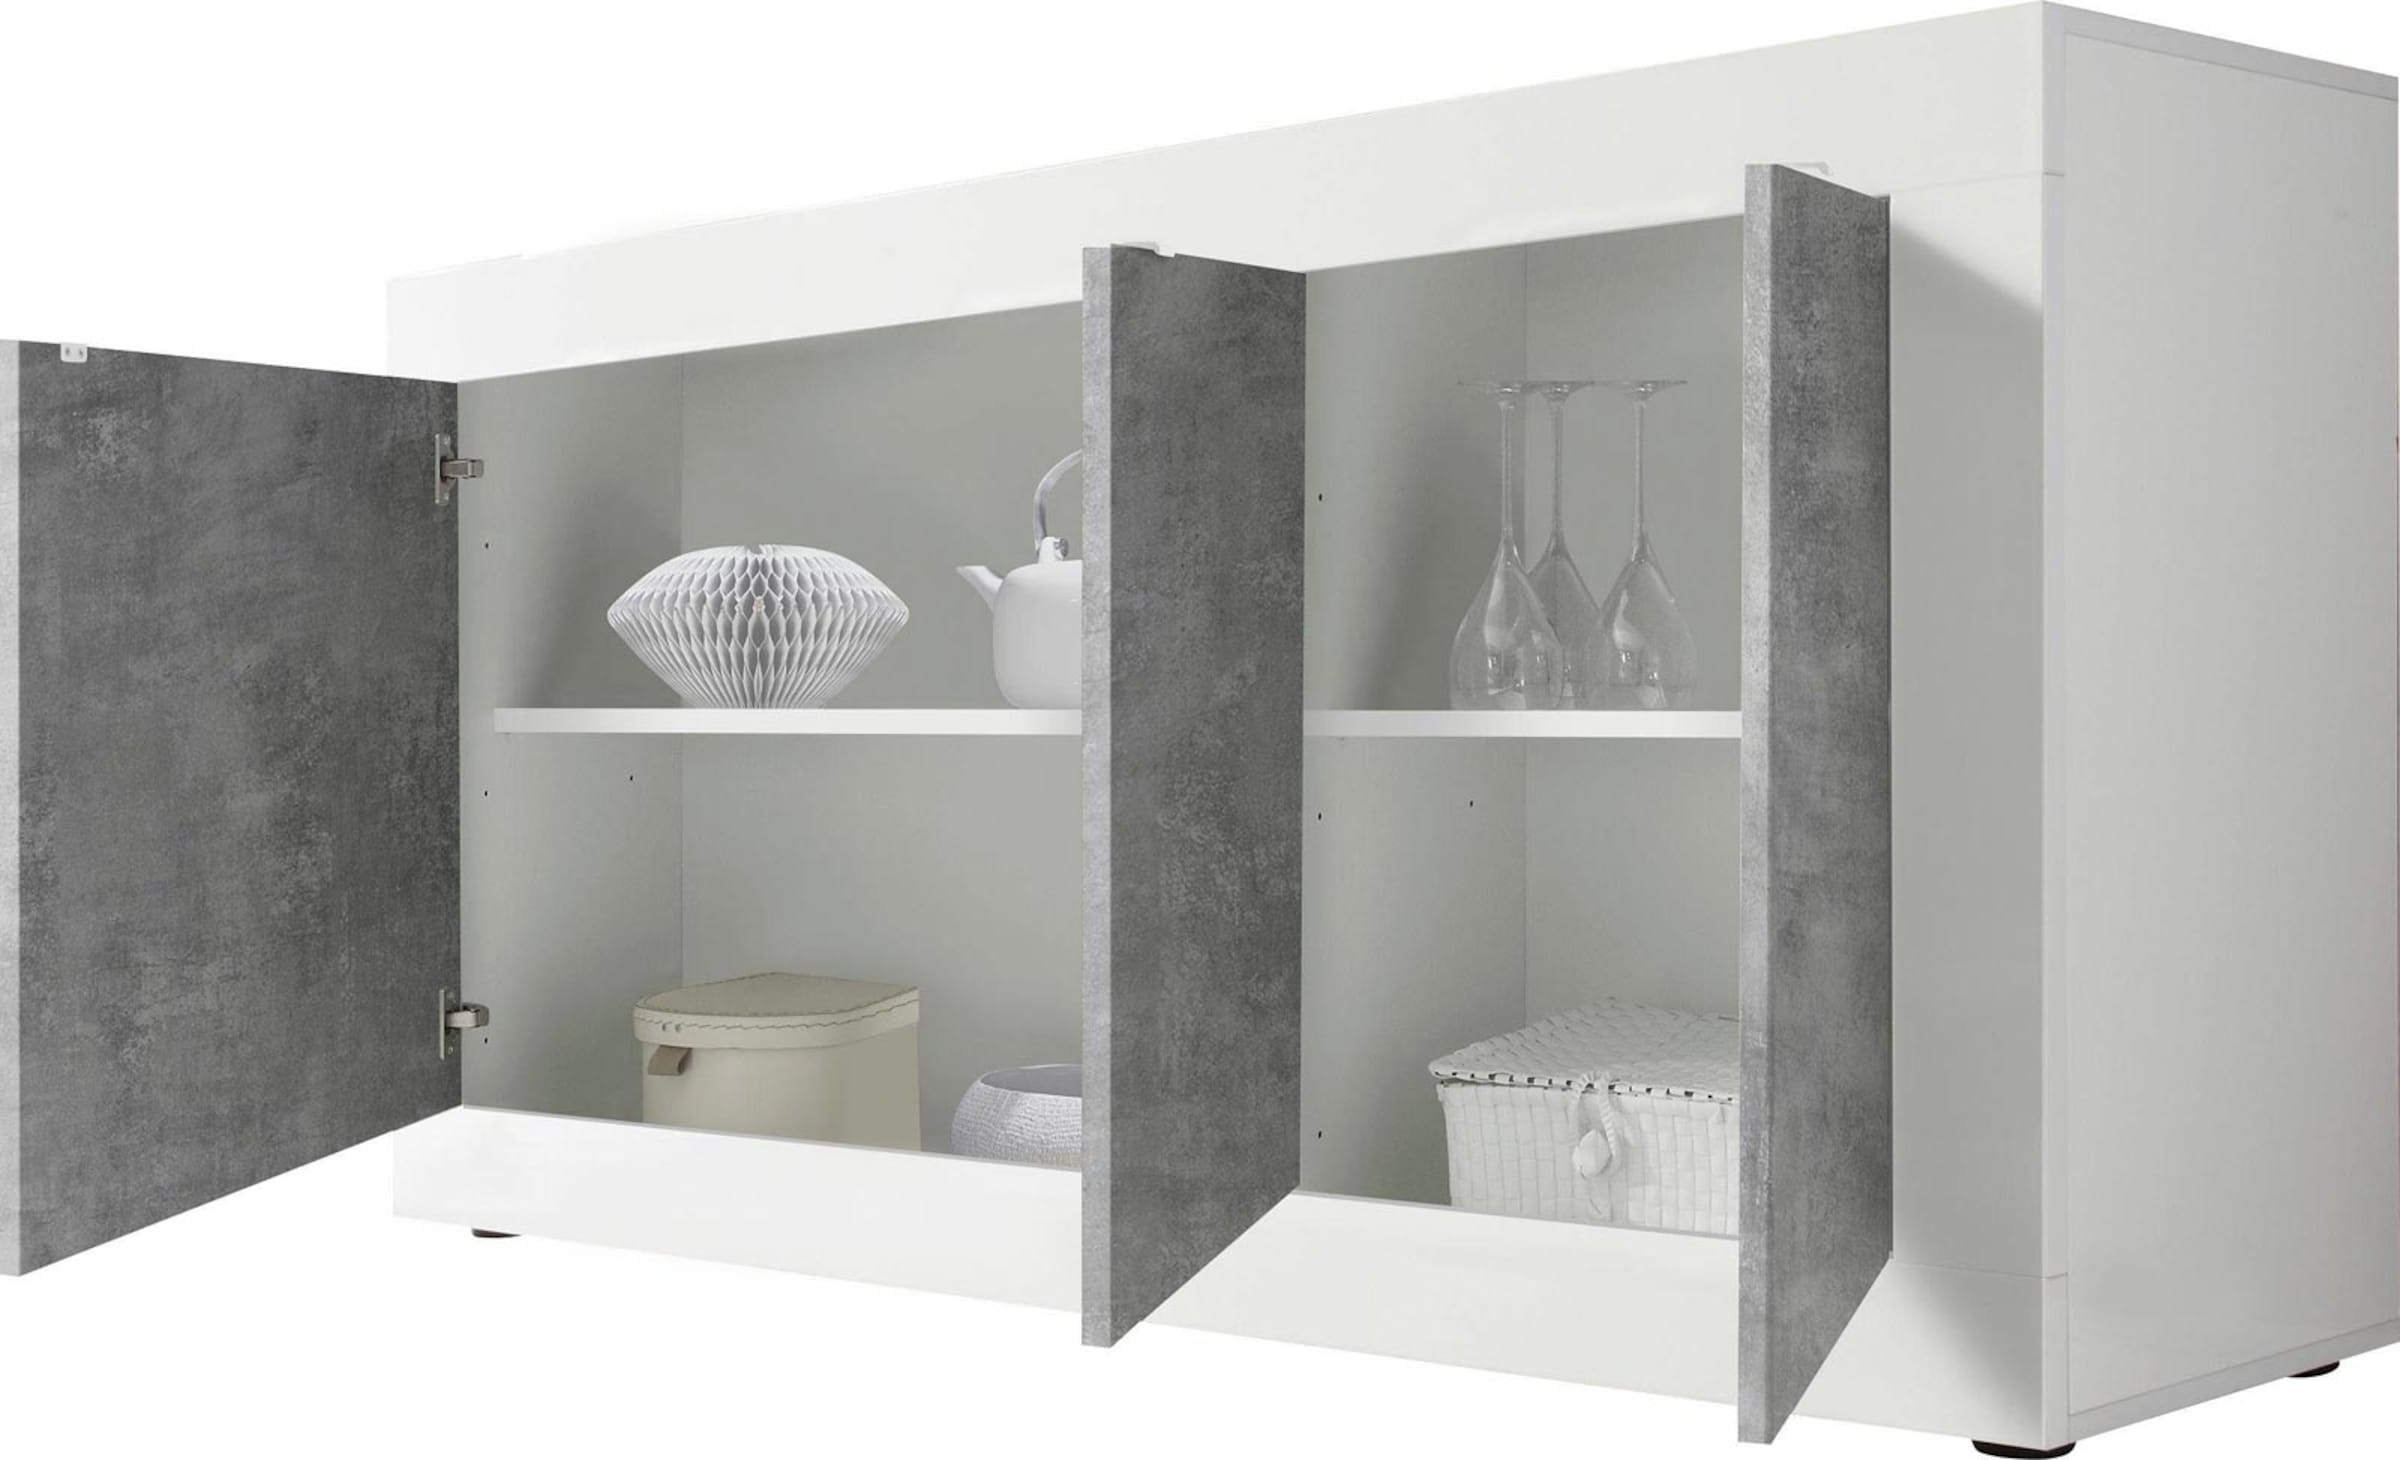 Möbel Side- & Highboards LC Sideboard in weiß hochglanz lack/beton-optik 